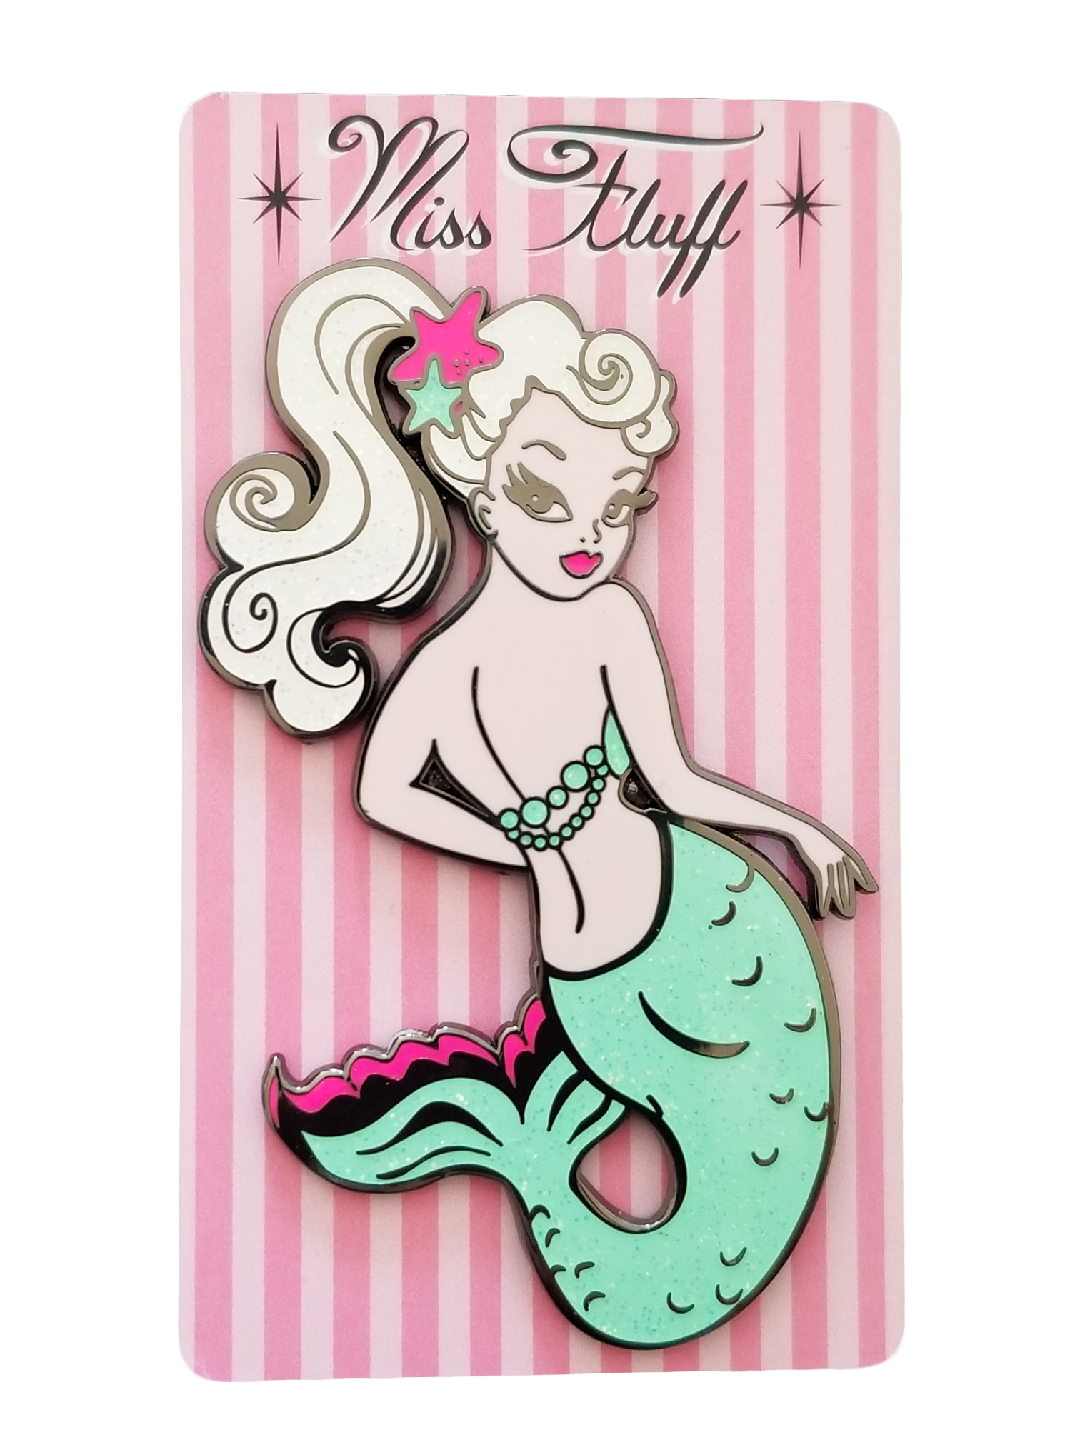 Pearla Mermaid Enamel Pin -PreOrder- Will Ship Week of May 1st.